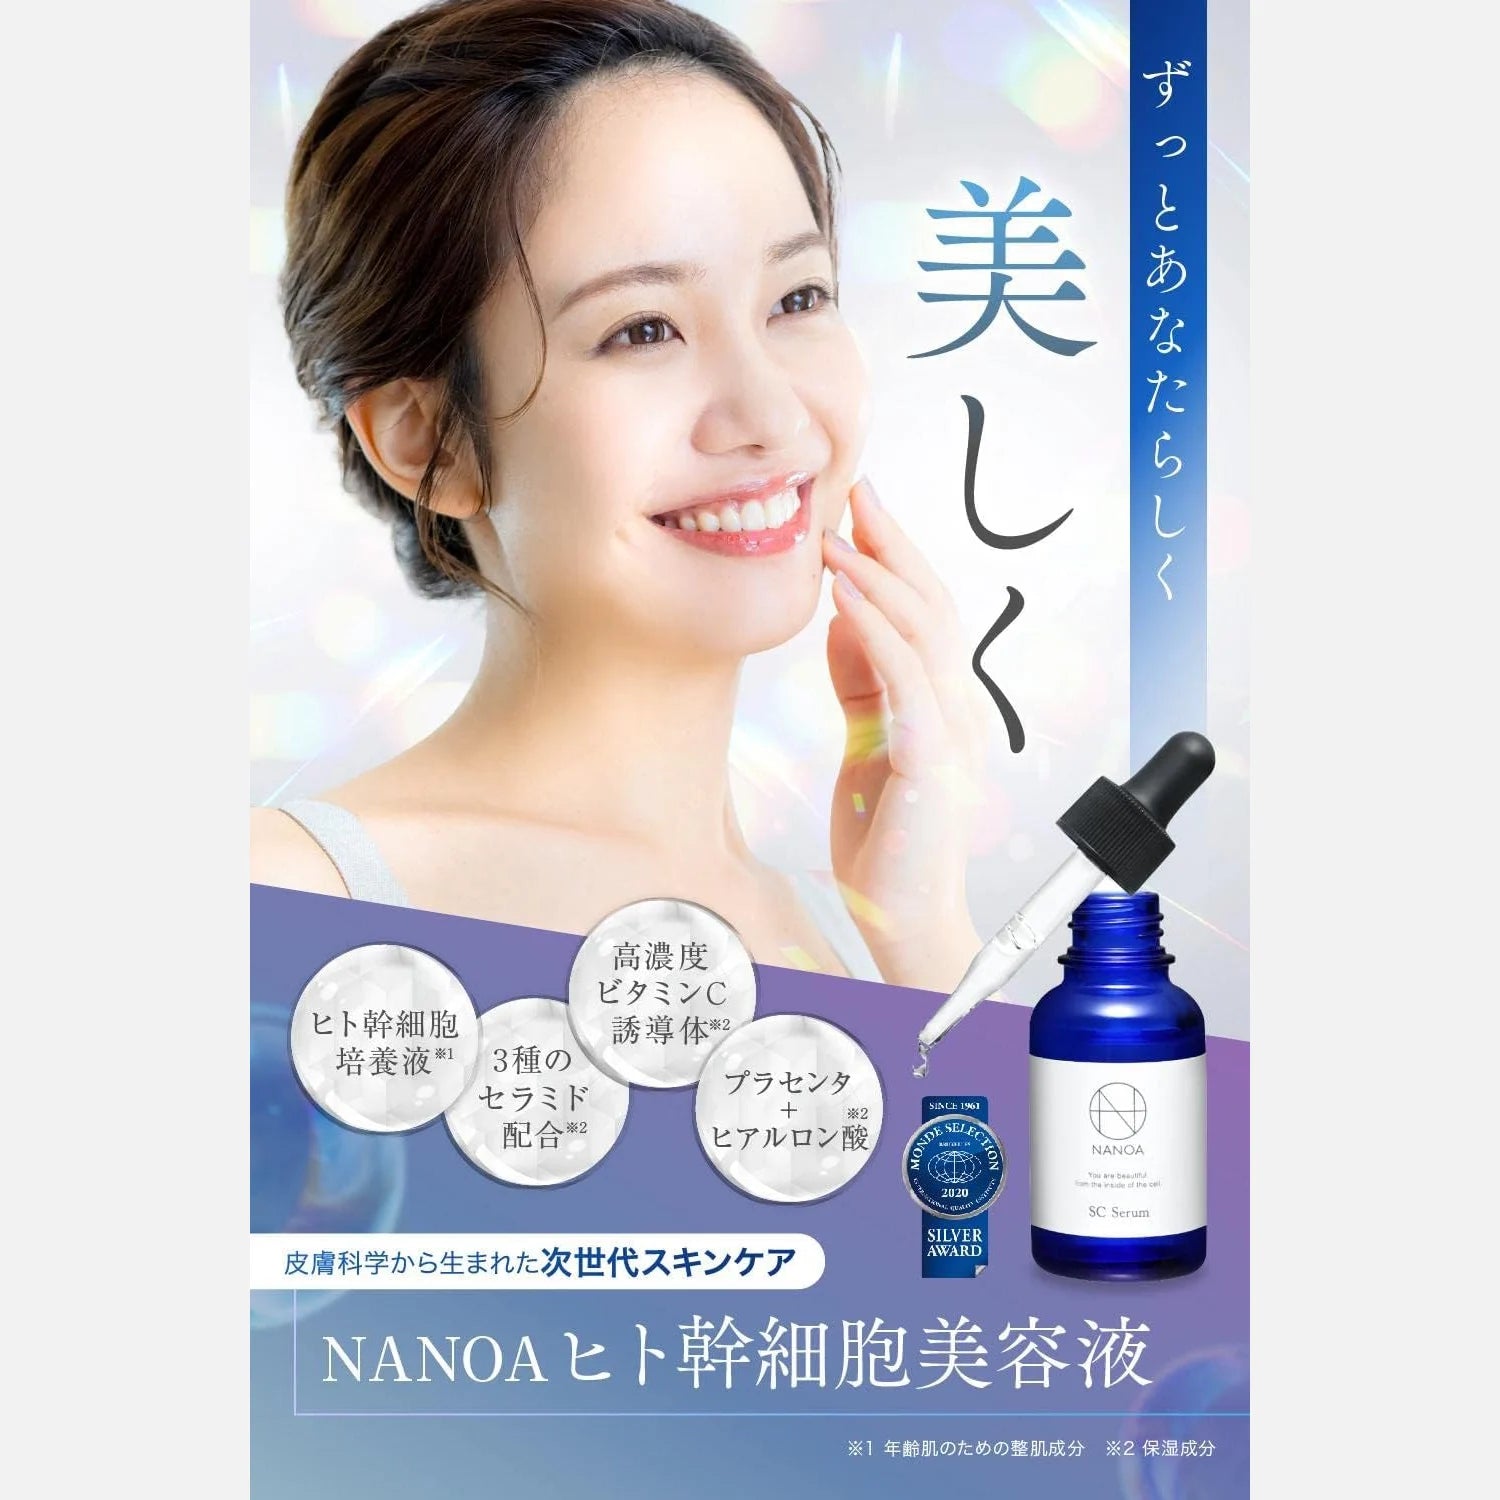 Nanoa SC Serum 30ml - Buy Me Japan